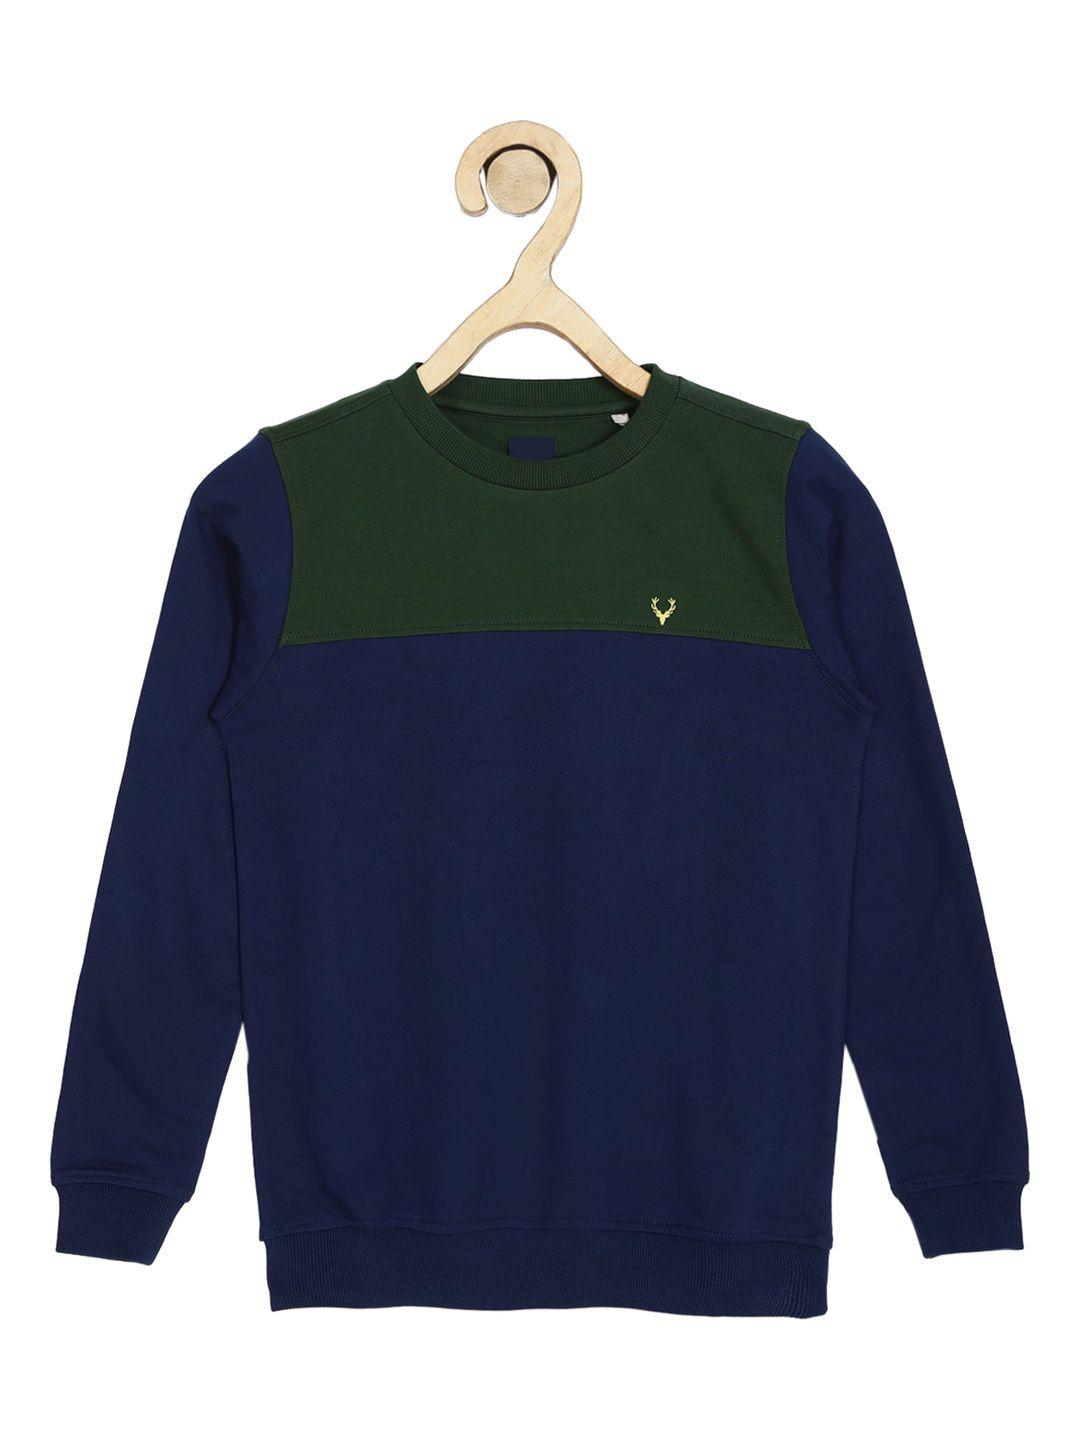 allen solly junior boys navy blue & green colourblocked cotton sweatshirt